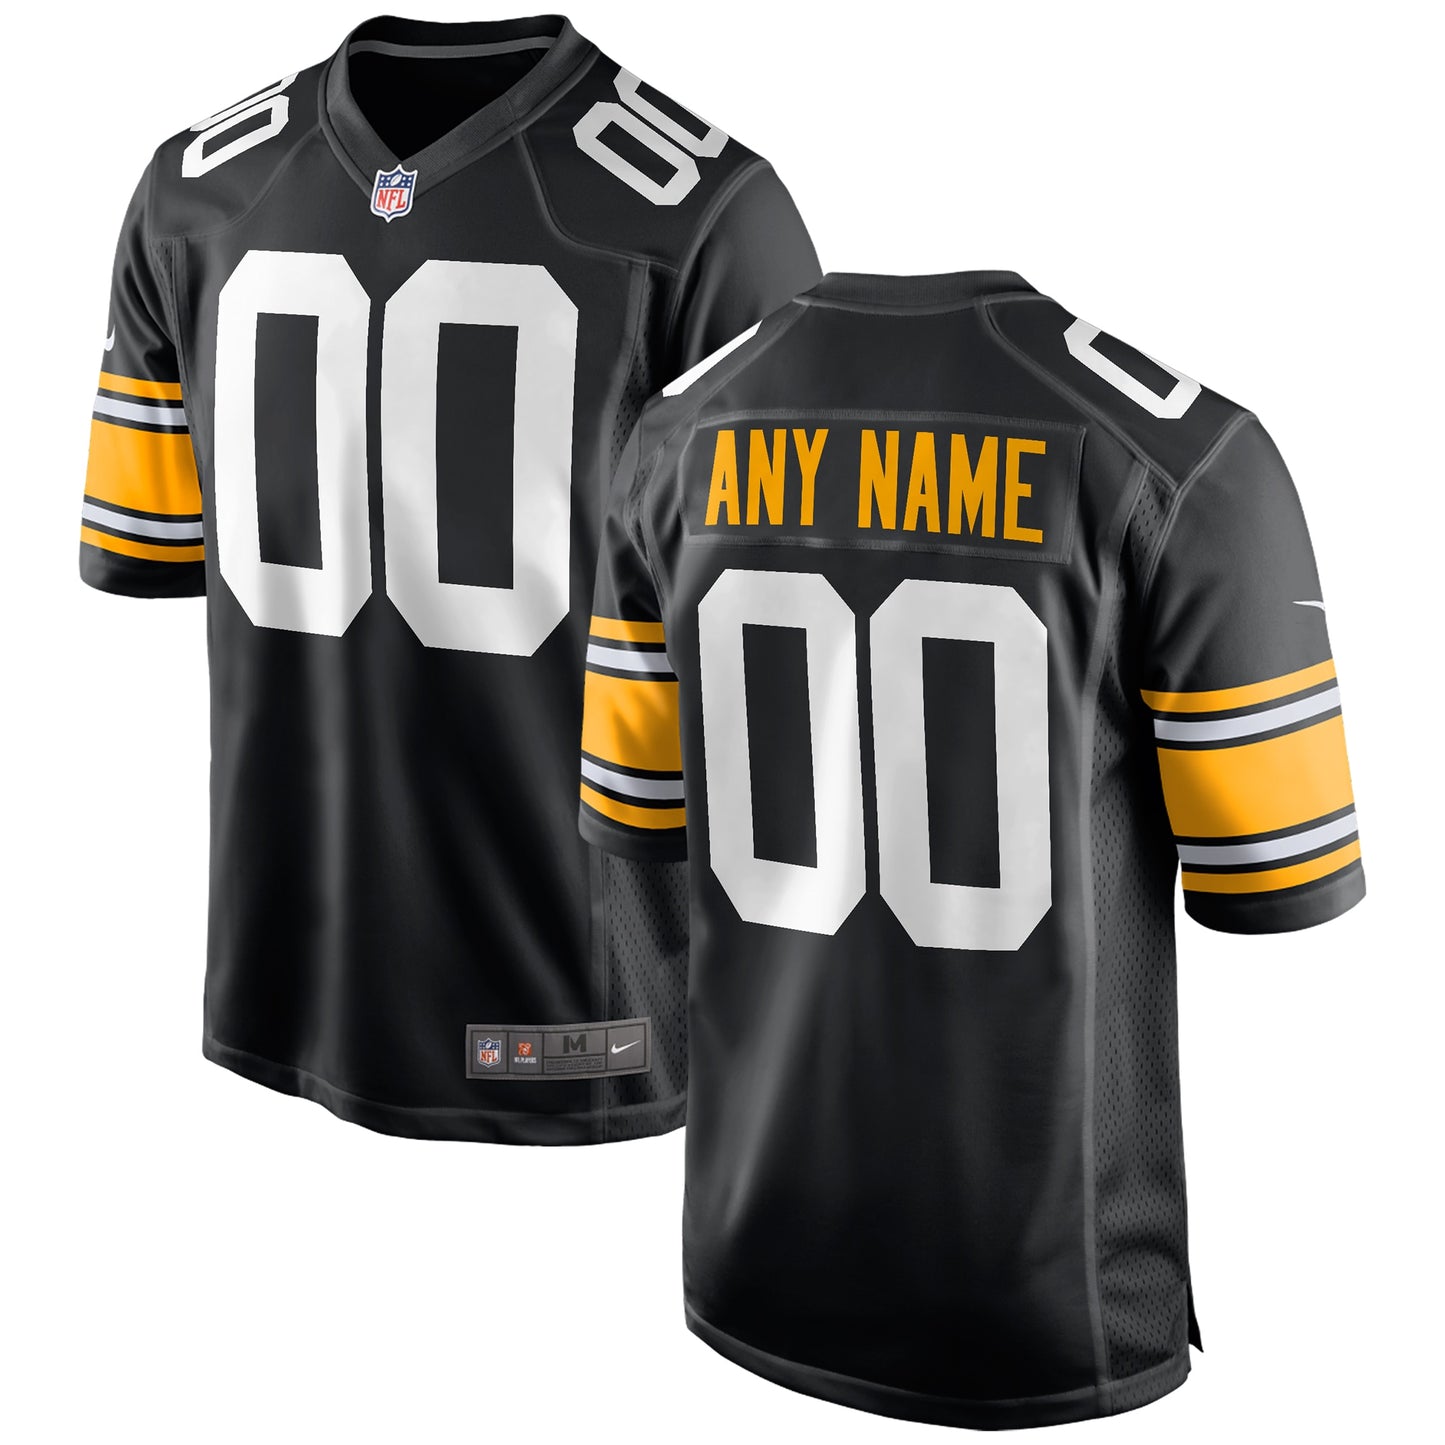 Pittsburgh Steelers Nike Youth Alternate Custom Game Jersey - Black